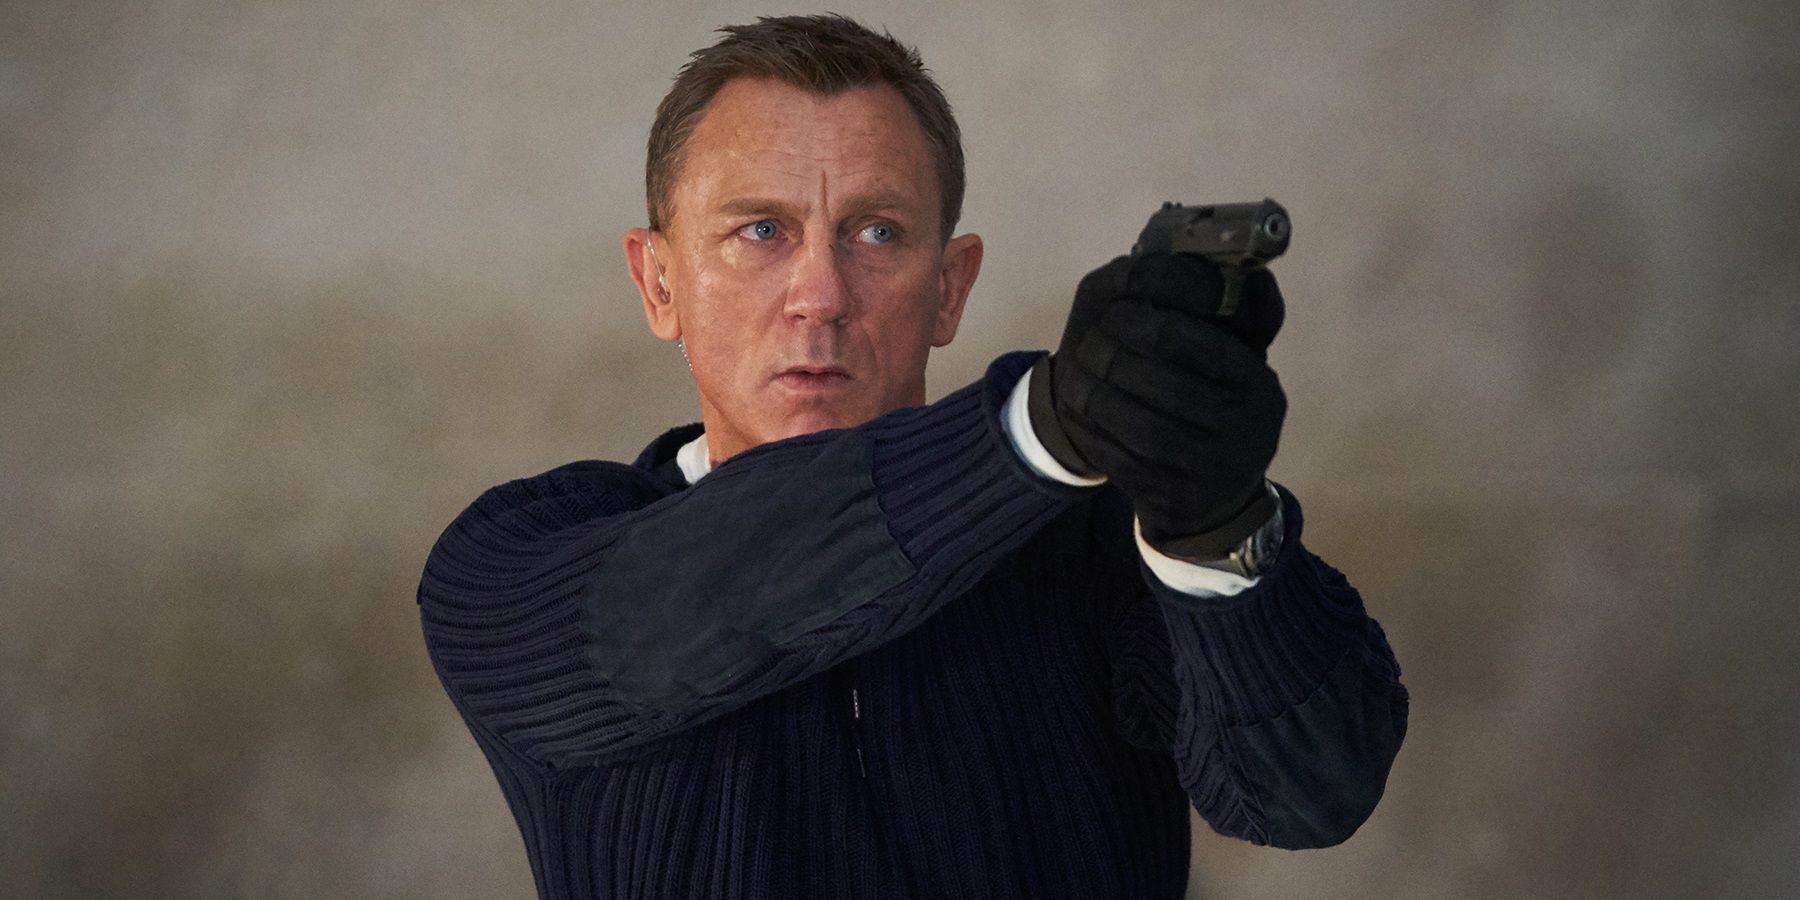 Larian Daniel Craig Sebagai 007 Akan Menjadi Salah Satu Yang Terbaik Sepanjang Zaman